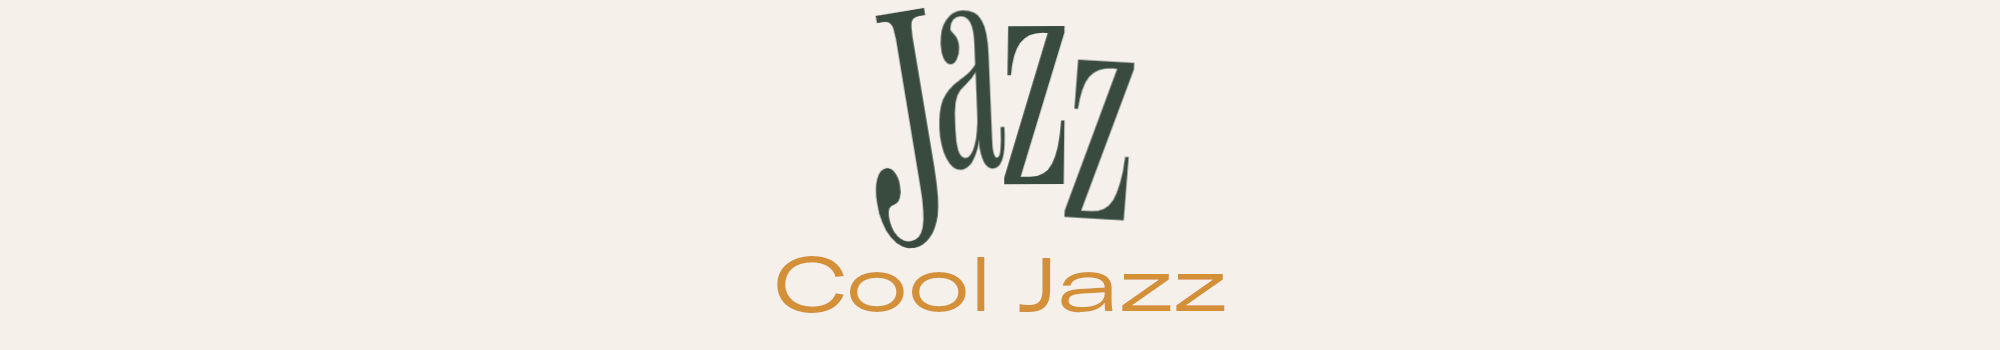 Rubrik till kategori: Jazz - Cool Jazz